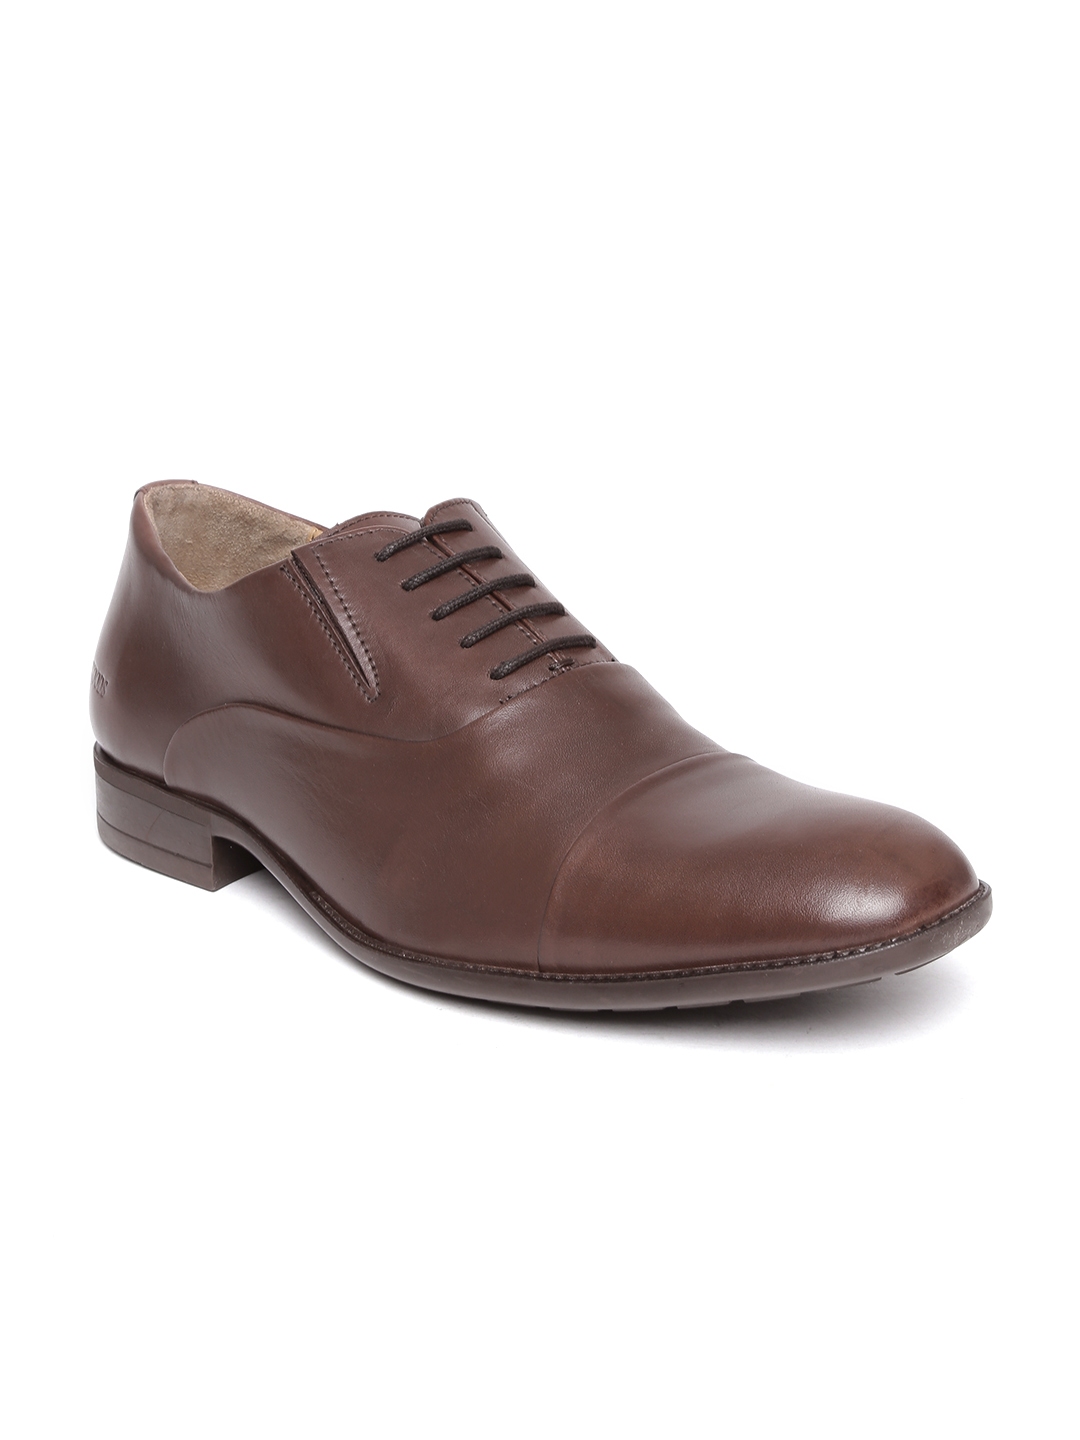 Buy Woods Men Brown Leather Formal Shoes - Formal Shoes for Men 1434690 ...